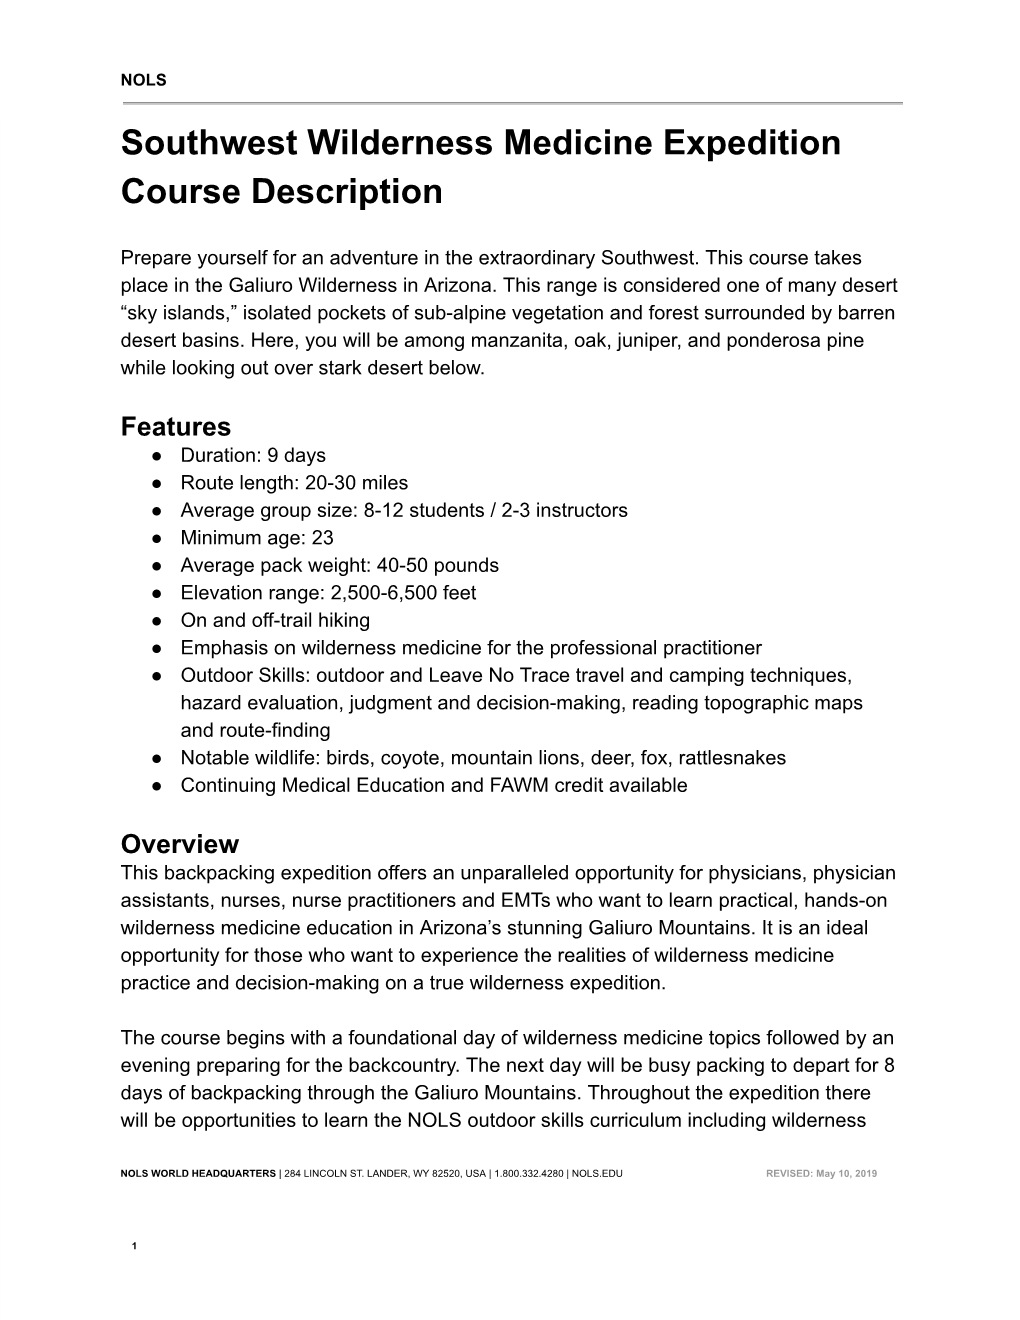 Southwest Wilderness Medicine Expedition Course Description